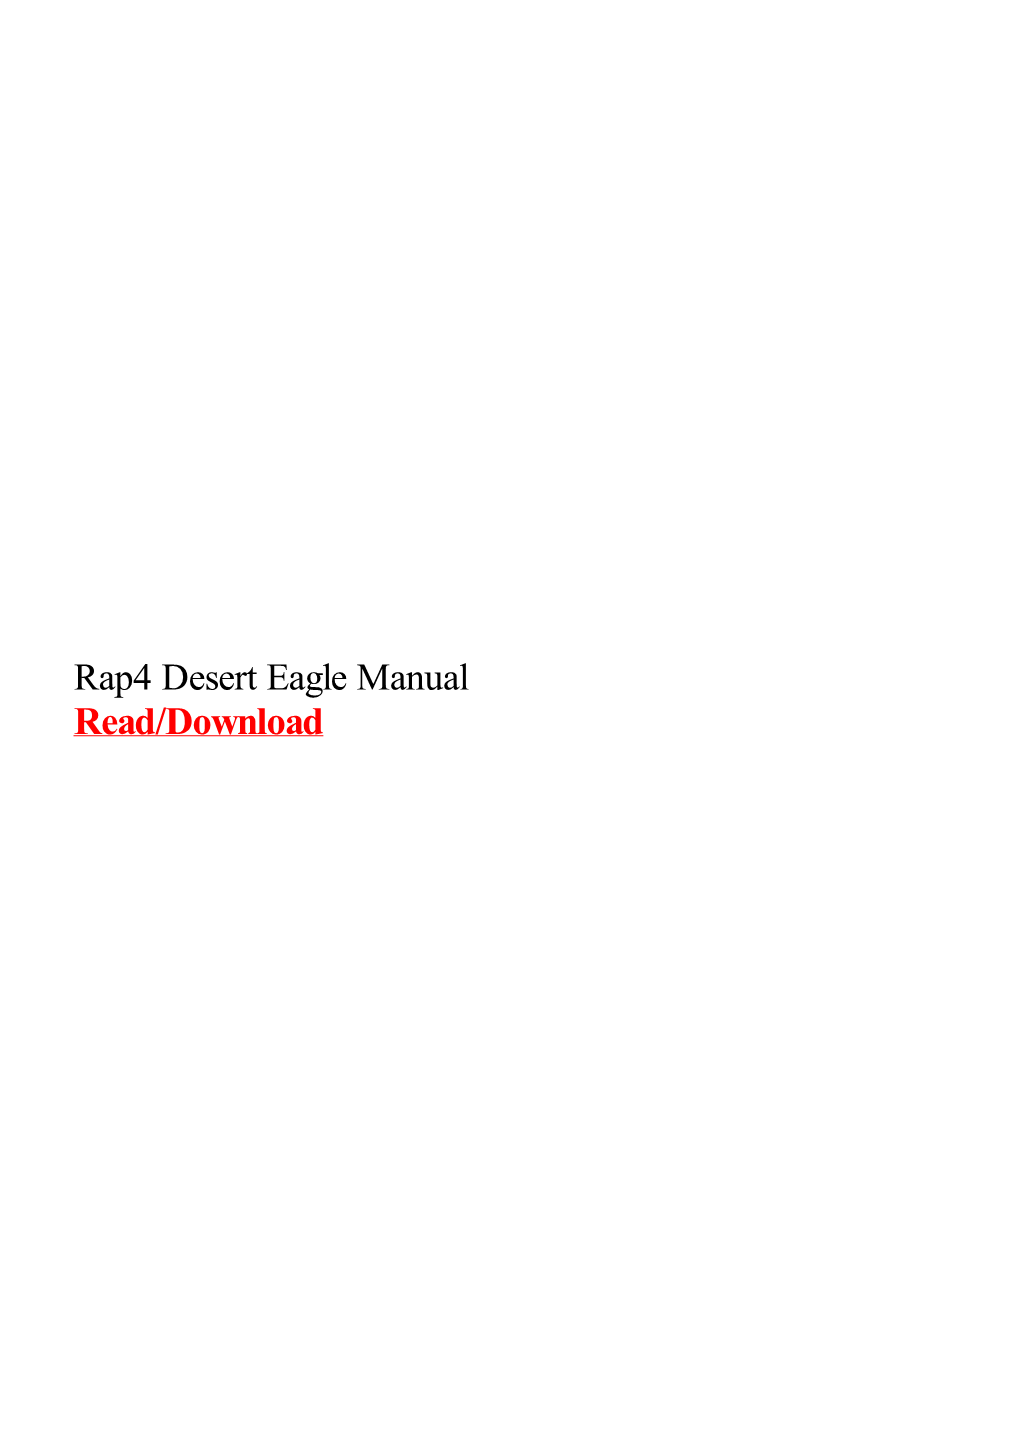 Rap4 Desert Eagle Manual.Pdf